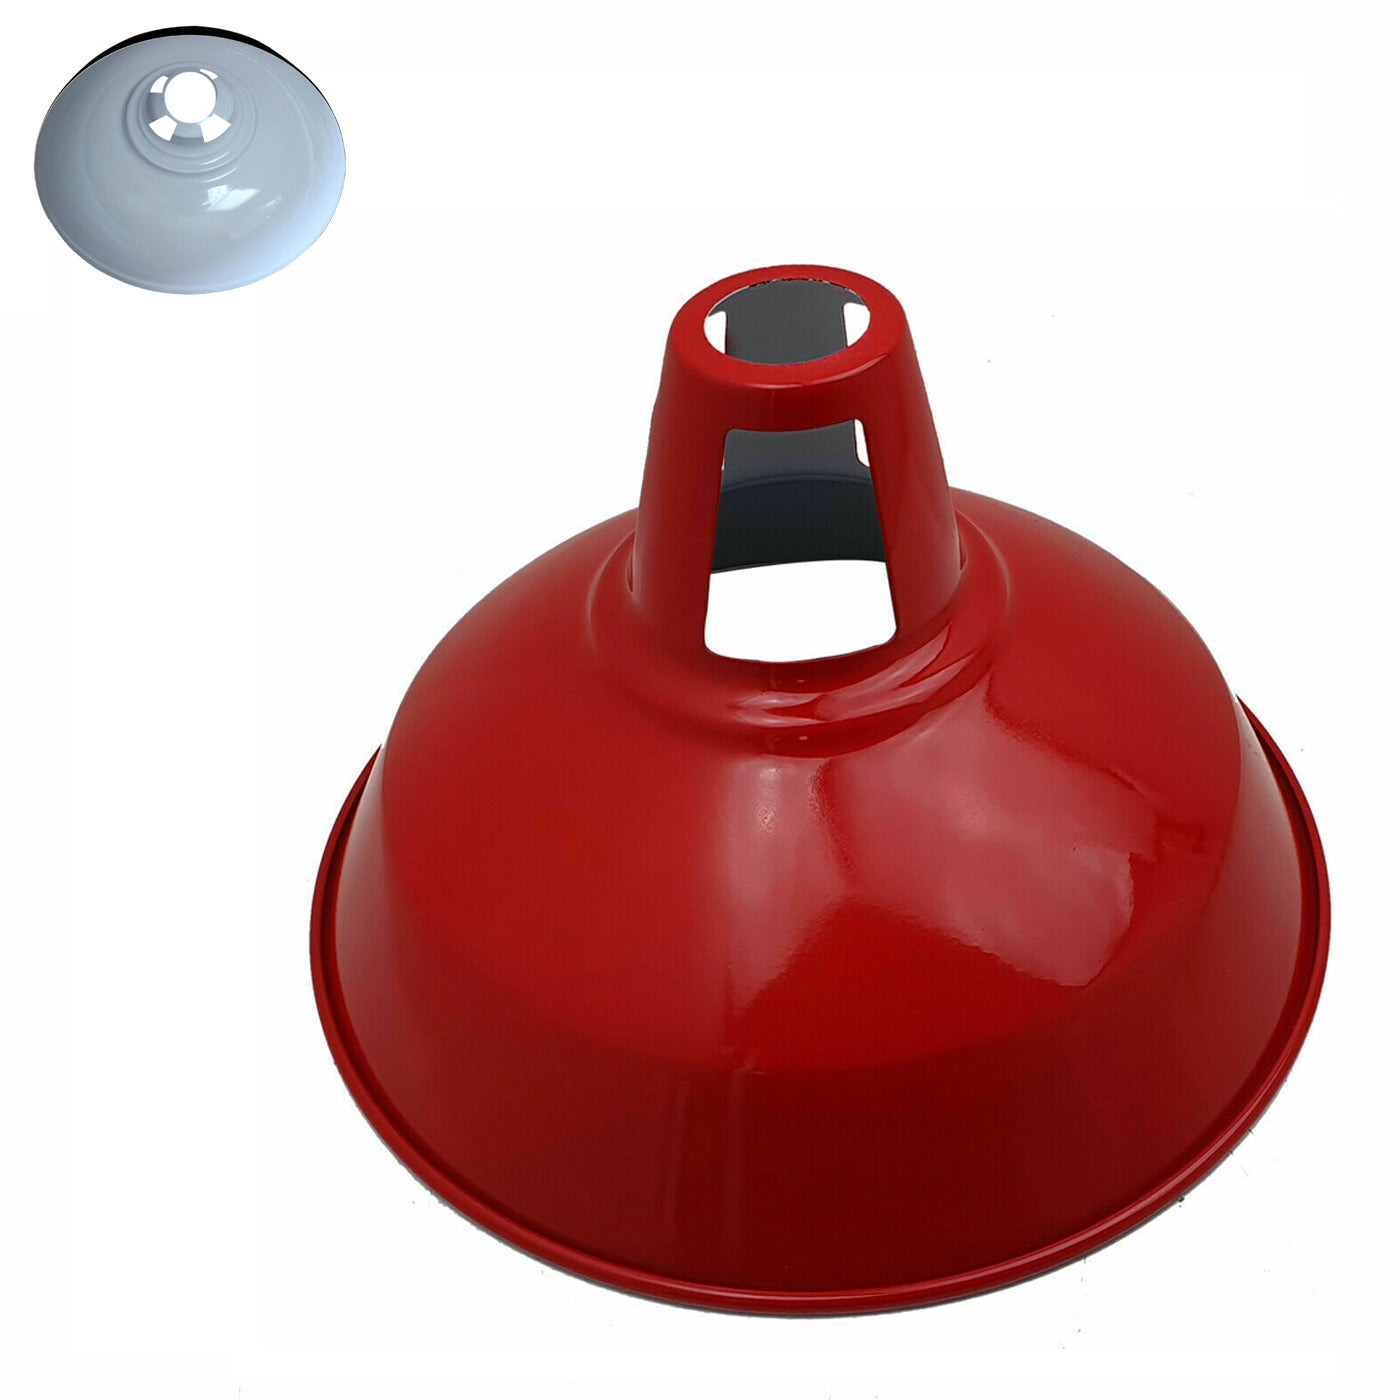 Modern Ceiling Red Light Shades Multi Colour & Type Lamp Shades Easy Fit New~1069 - LEDSone UK Ltd